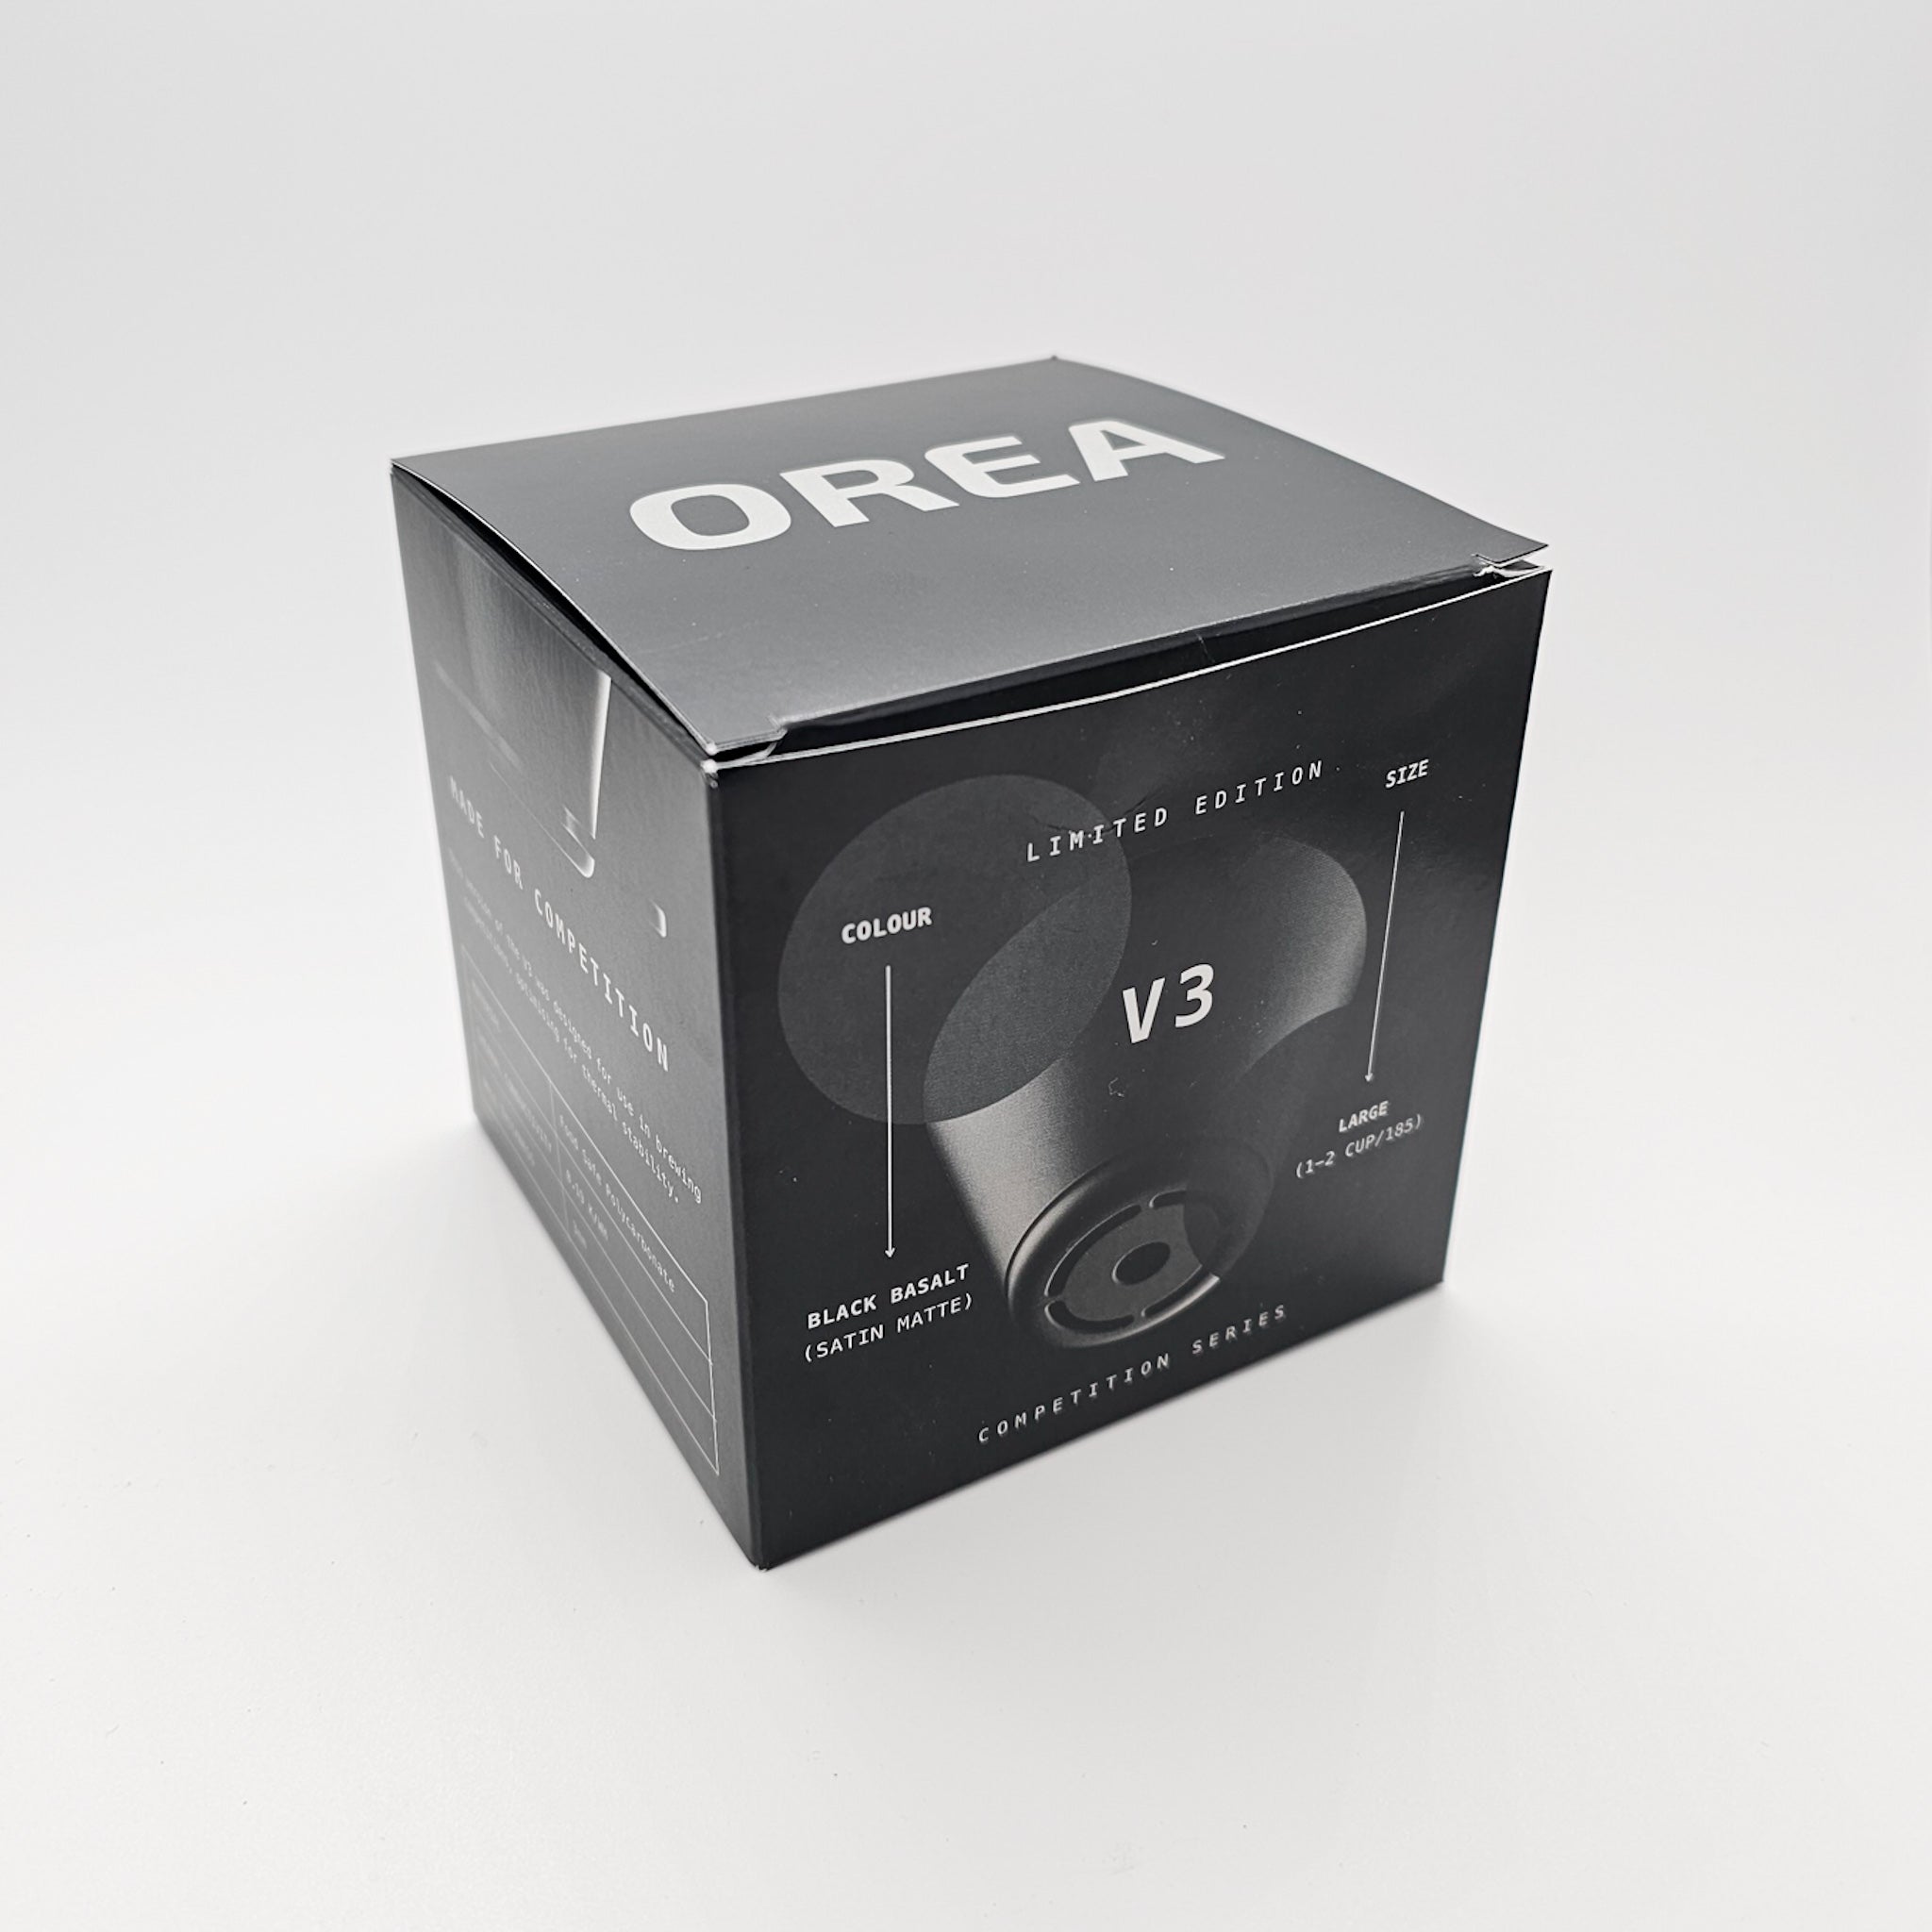 Orea Dripper V3- Black Basalt Limited Edition with Base